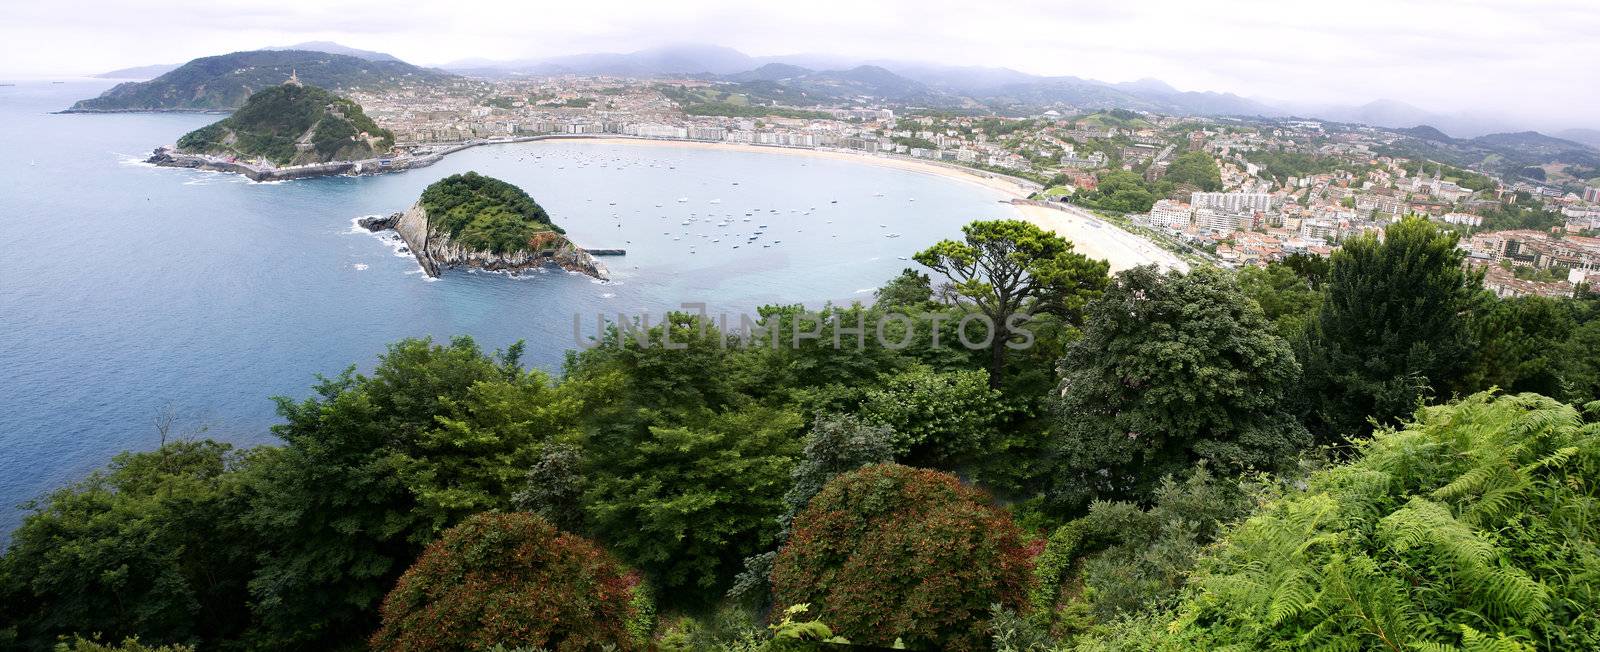 Bird view of San Sebanstian city and sea by lunamarina